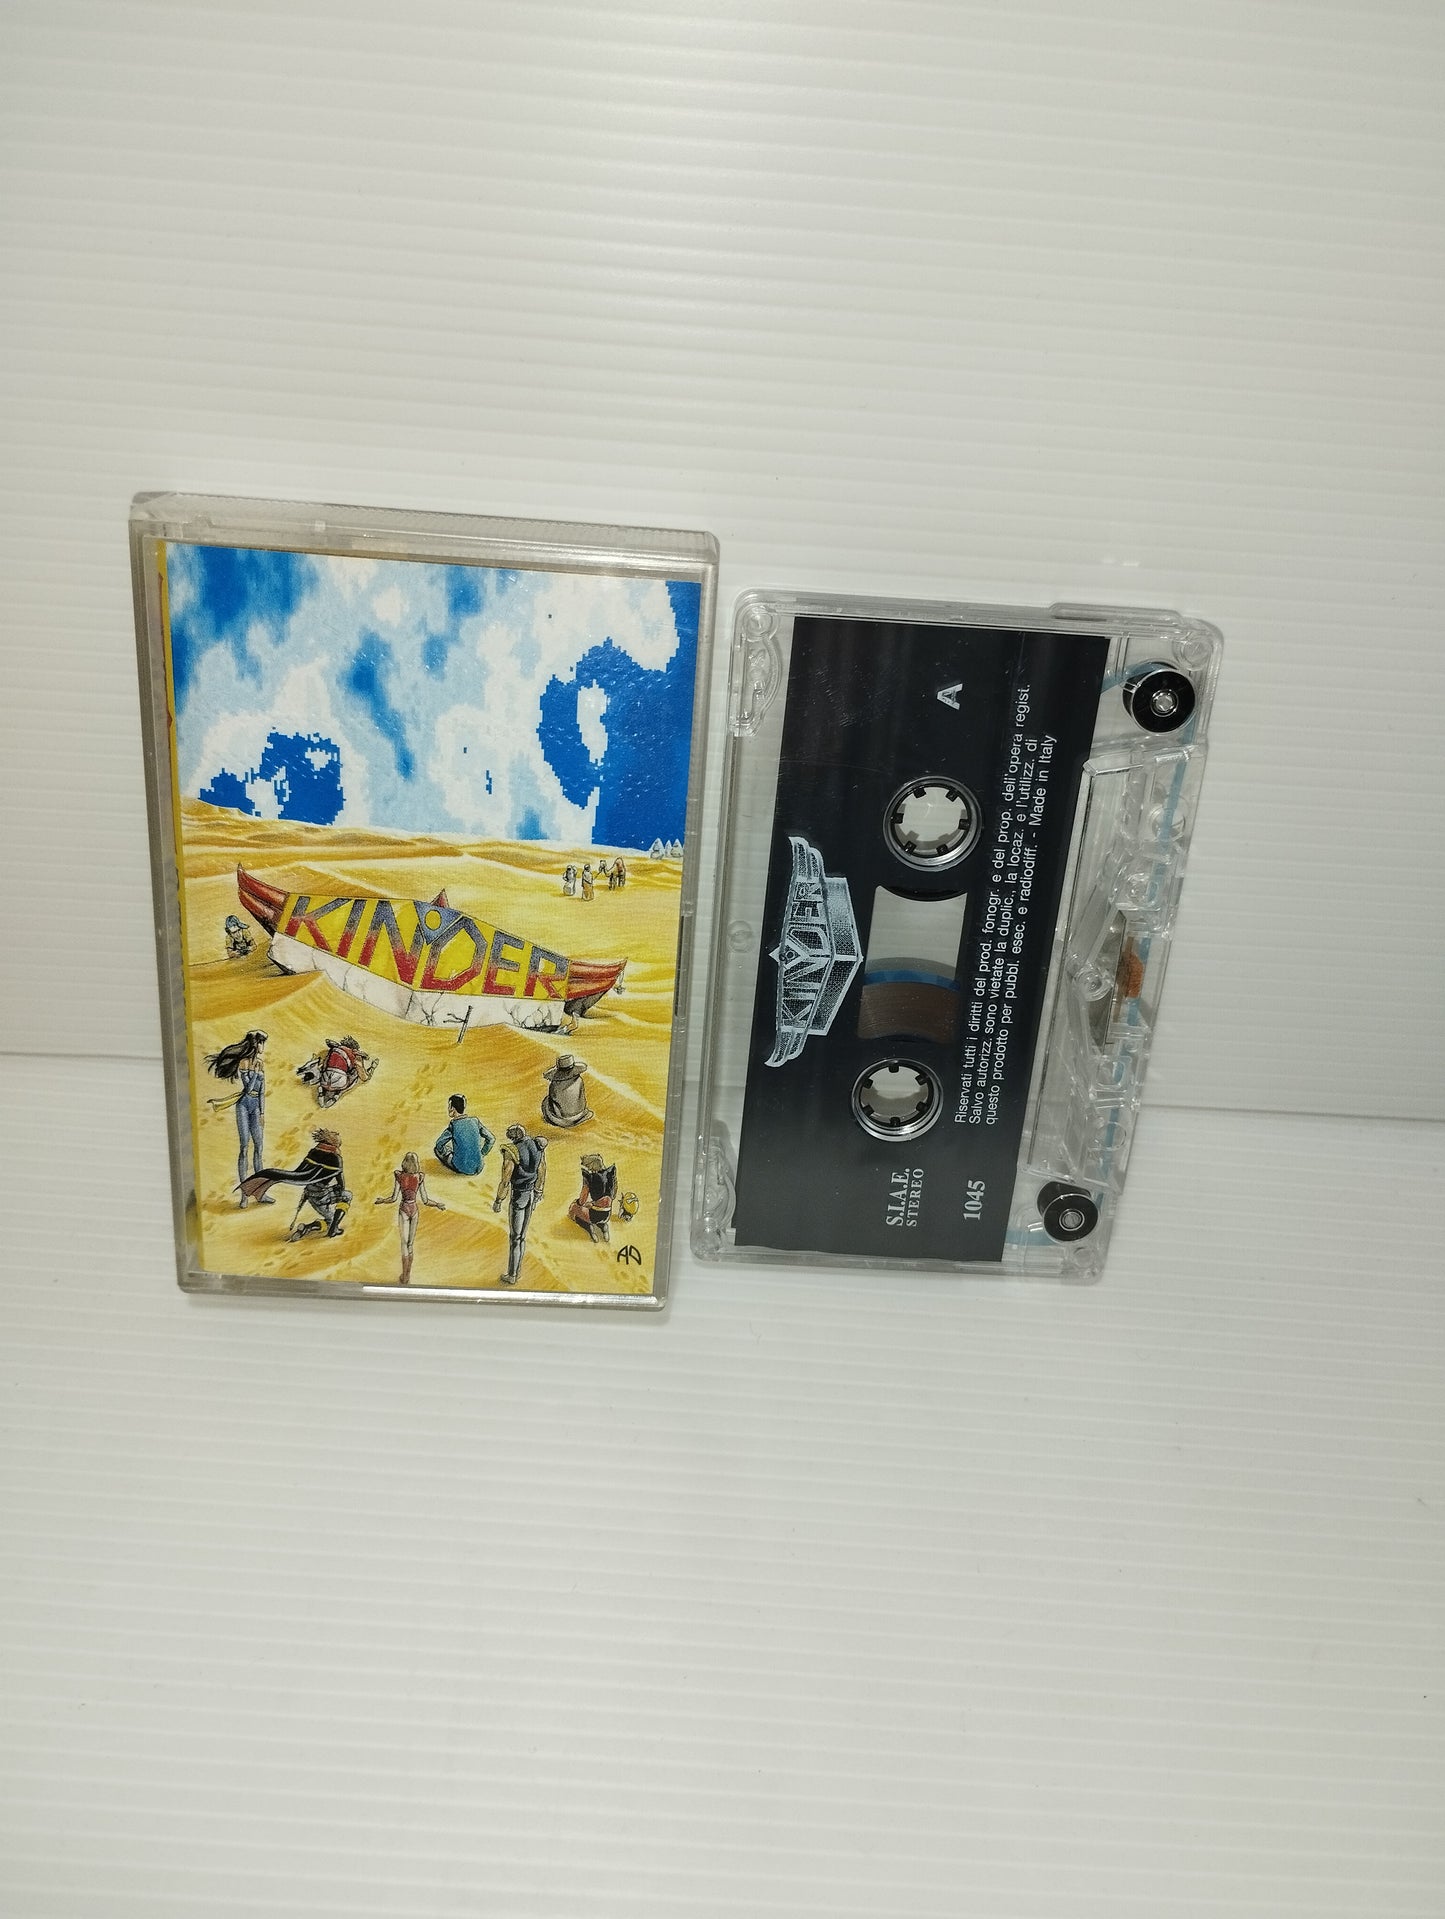 Mangy Children" The Kinder Music Cassette